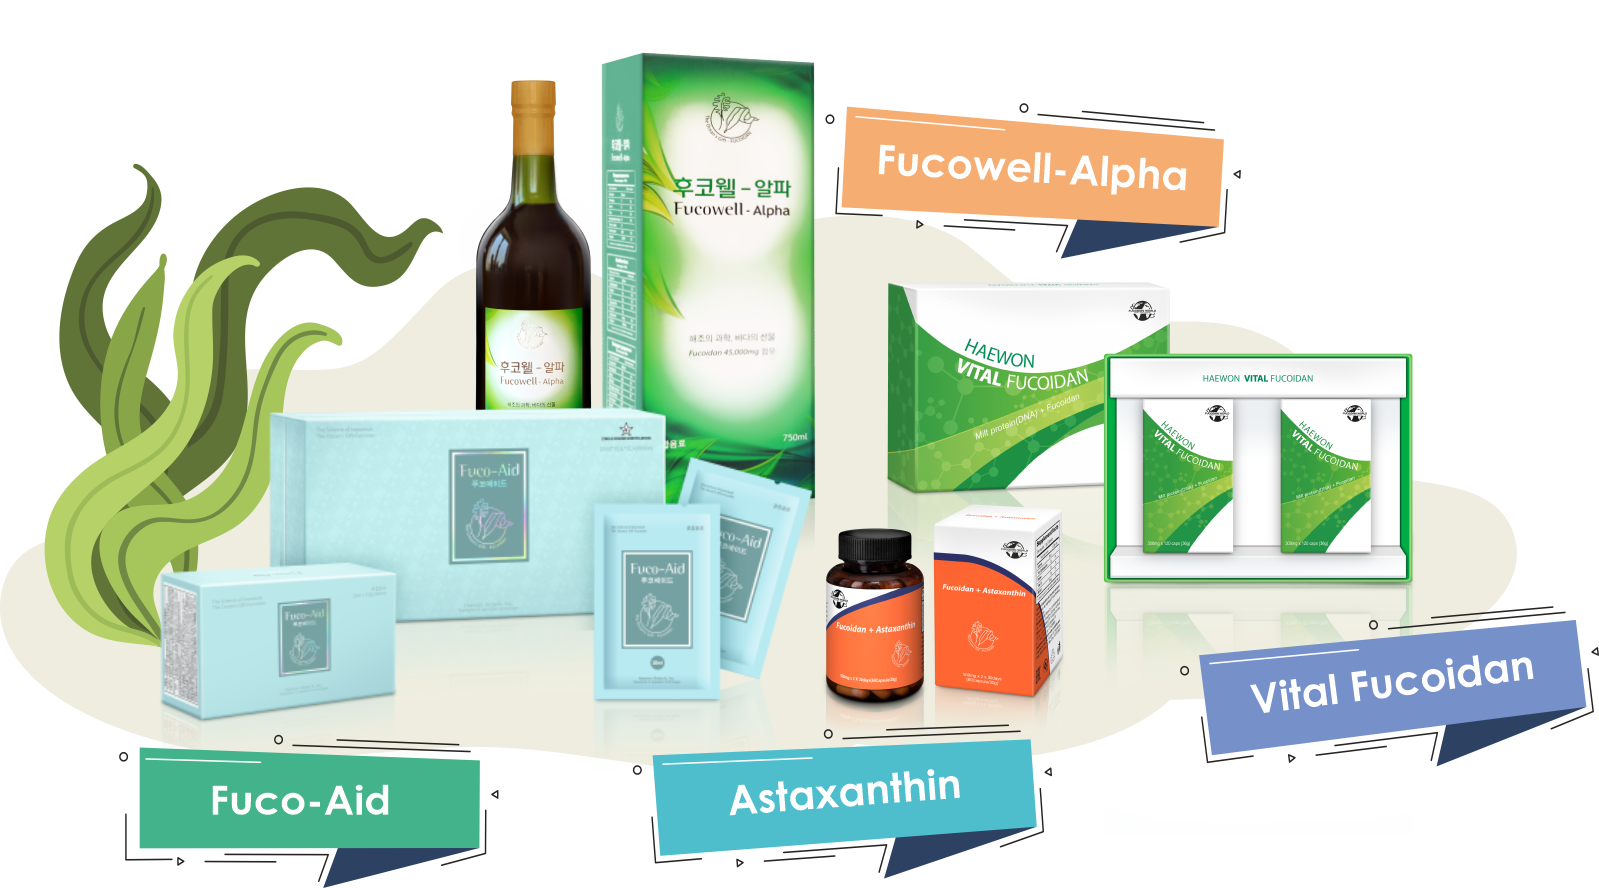 Продукты с фукоиданом  Fucoidan + Astaxanthin, Haewon Vital Fucoidan, Fucowell-Alpha, Fuco-Aid